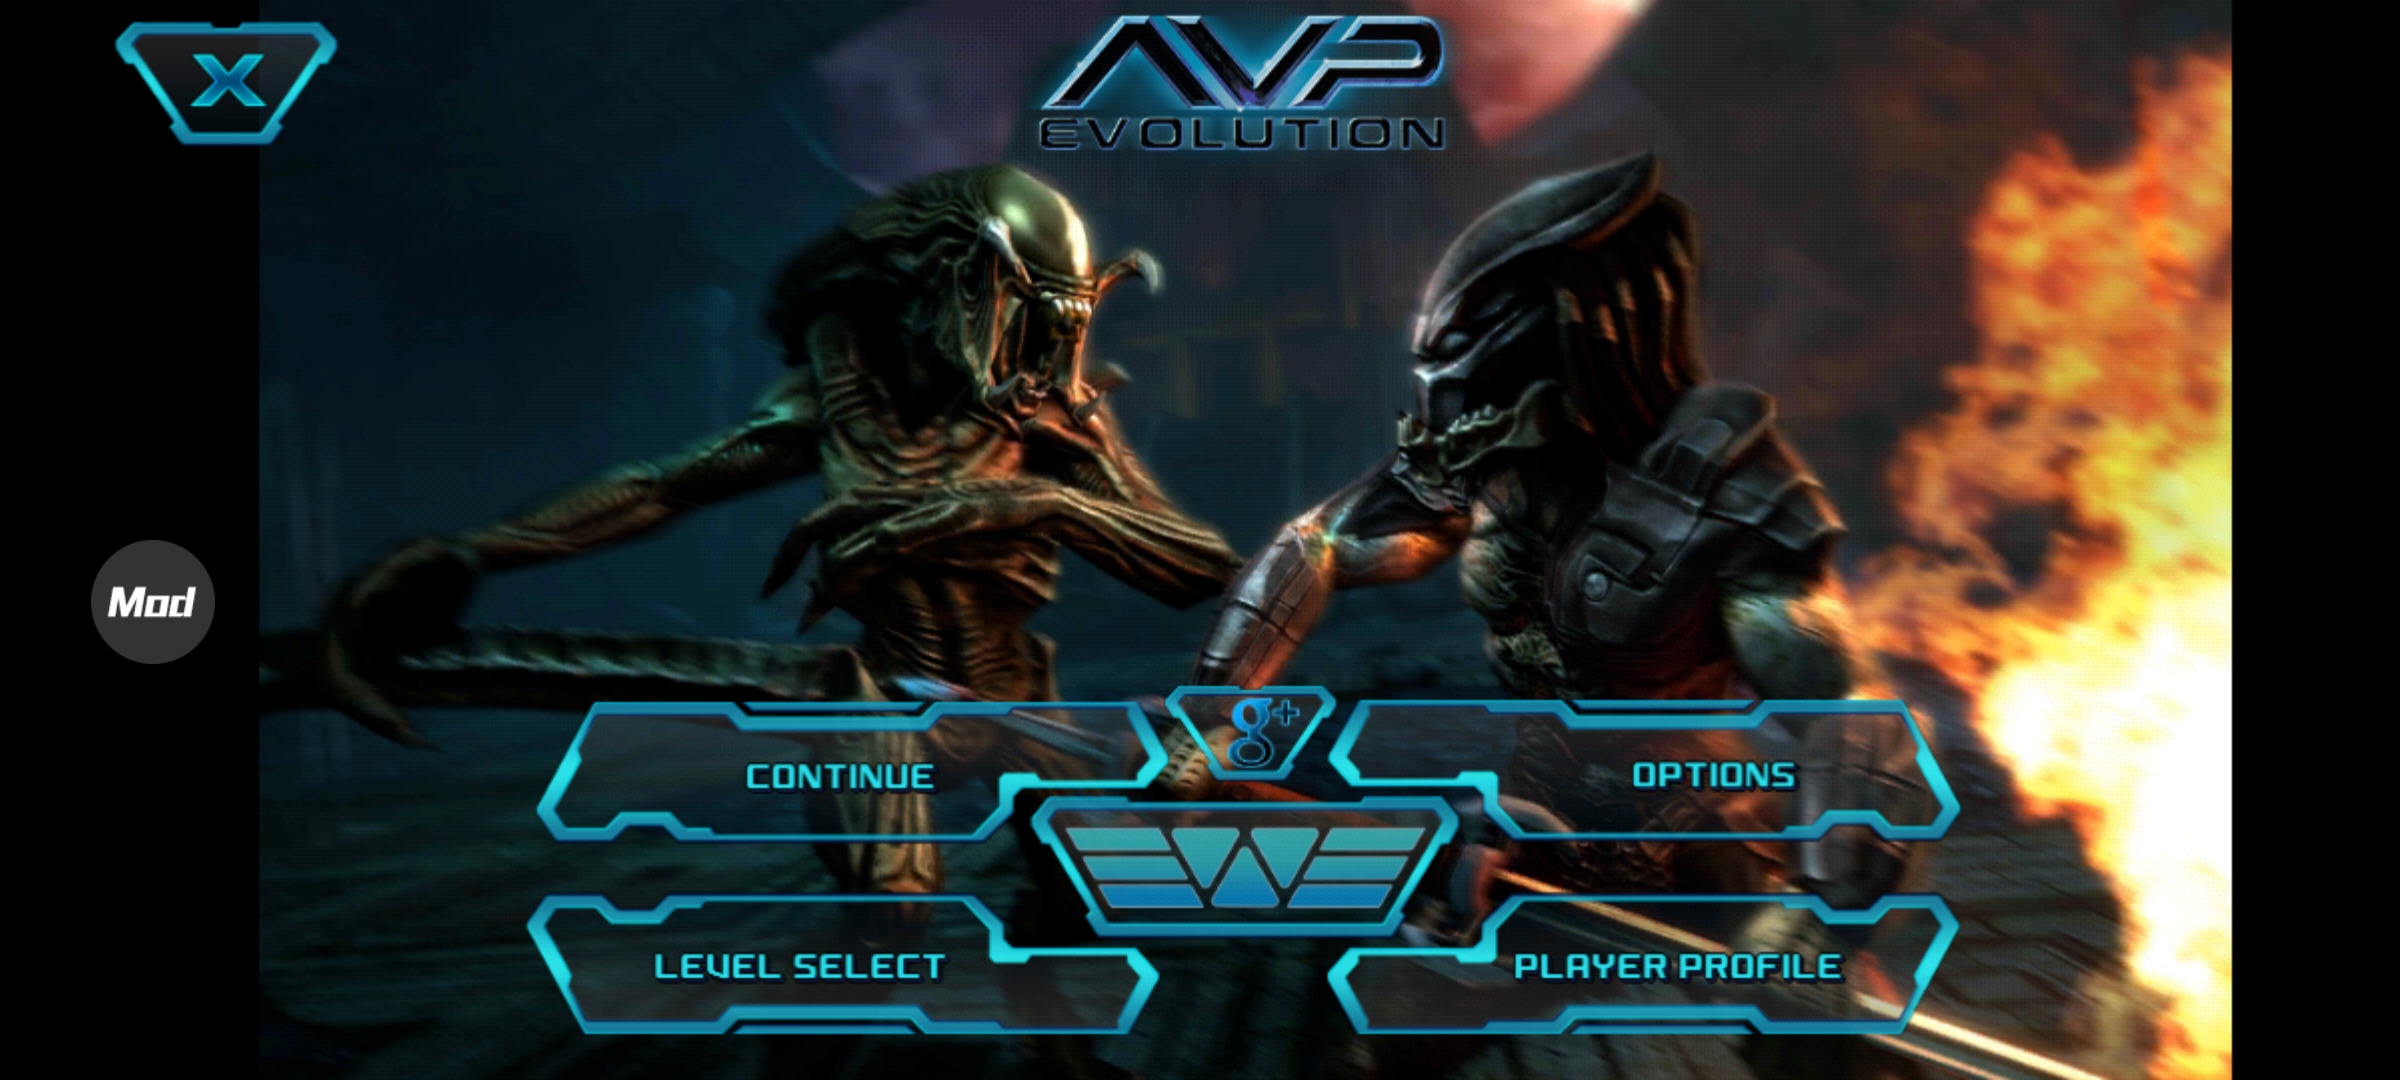 Андроид игра чужой хищник. Aliens vs. Predator (игра, 2010). AVP Evolution 2. AVP: Evolution. Alien Evolution игра.